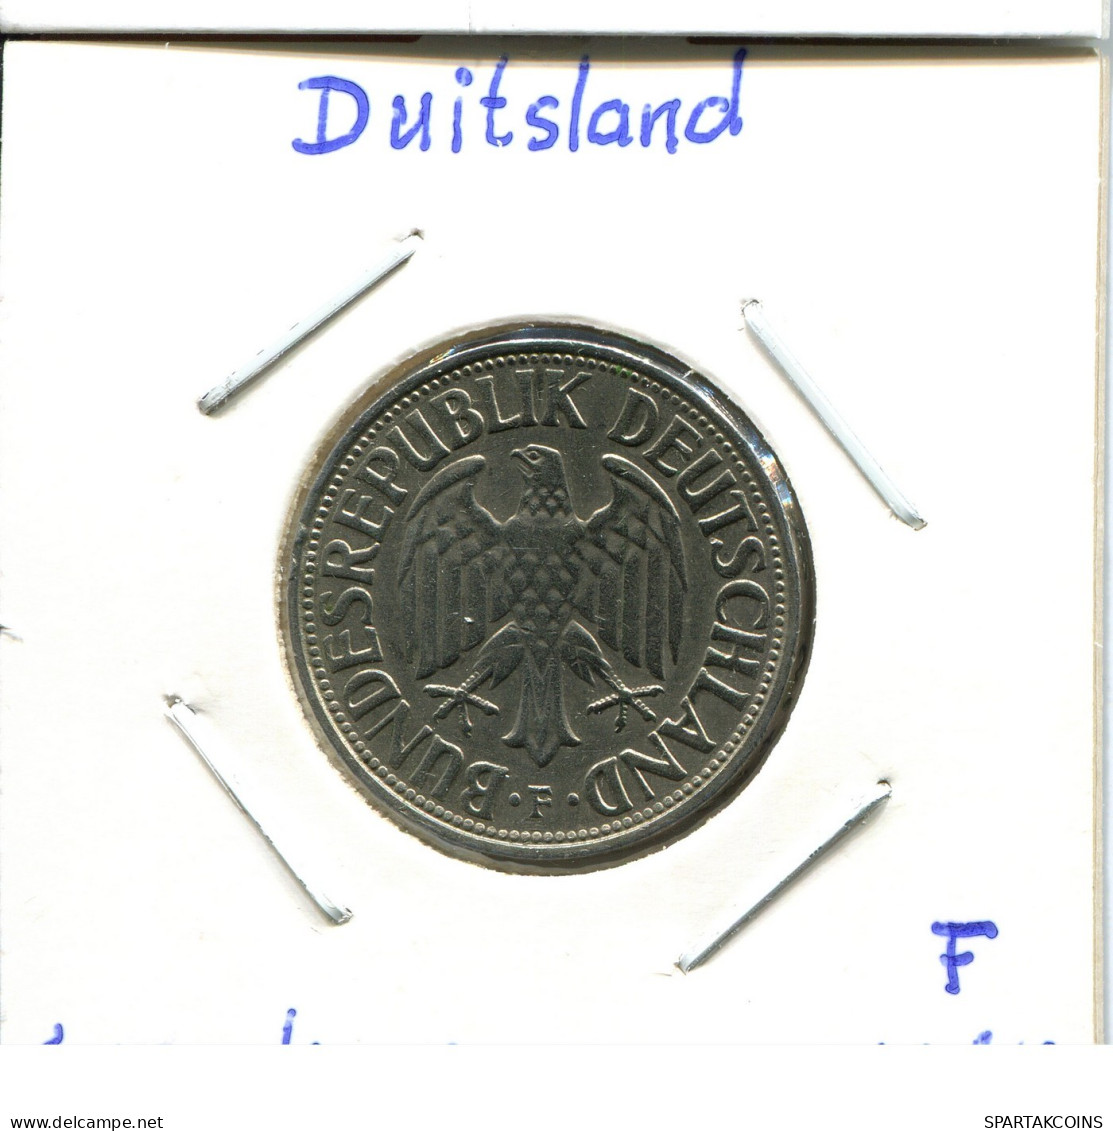 1 DM 1967 F BRD ALEMANIA Moneda GERMANY #DB752.E.A - 1 Mark